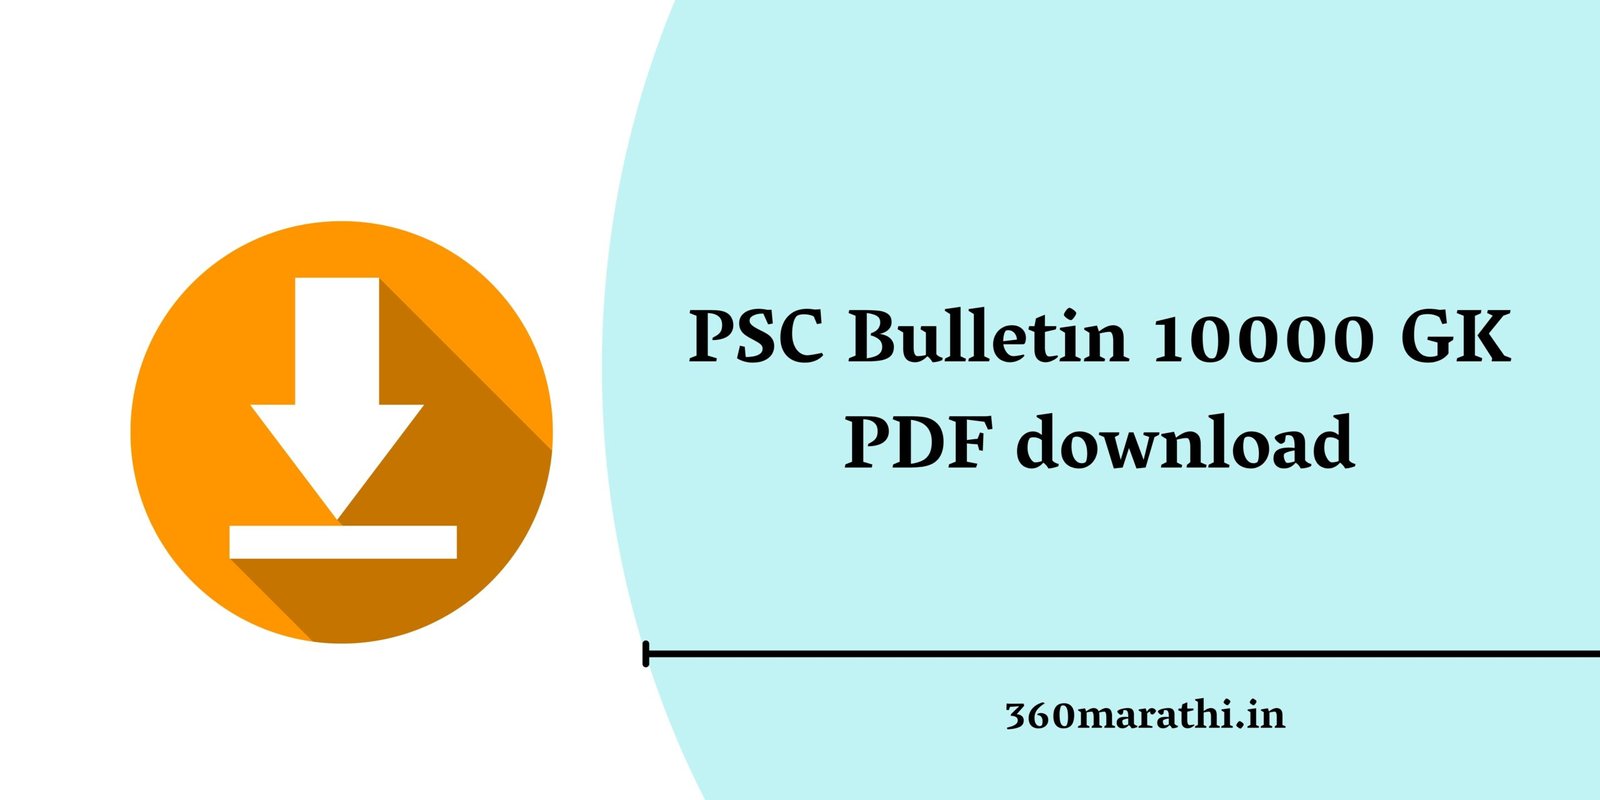 PSC Bulletin 10000 GK PDF download